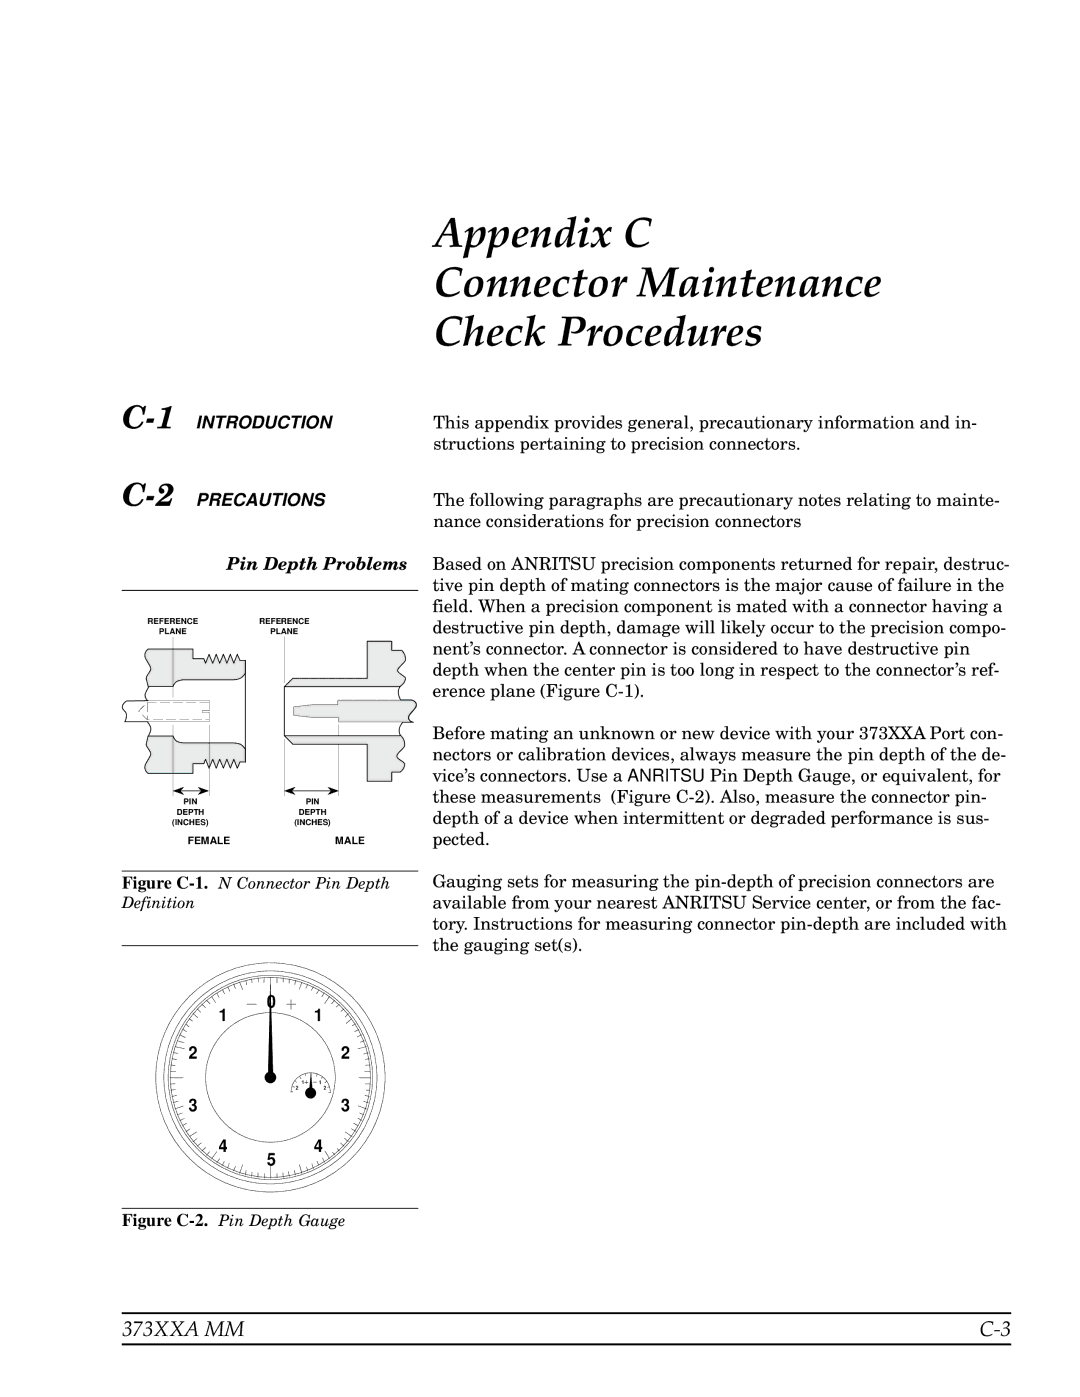 Anritsu 373XXA manual Appendix C Connector Maintenance Check Procedures, 1INTRODUCTION 2PRECAUTIONS, Pin Depth Problems 